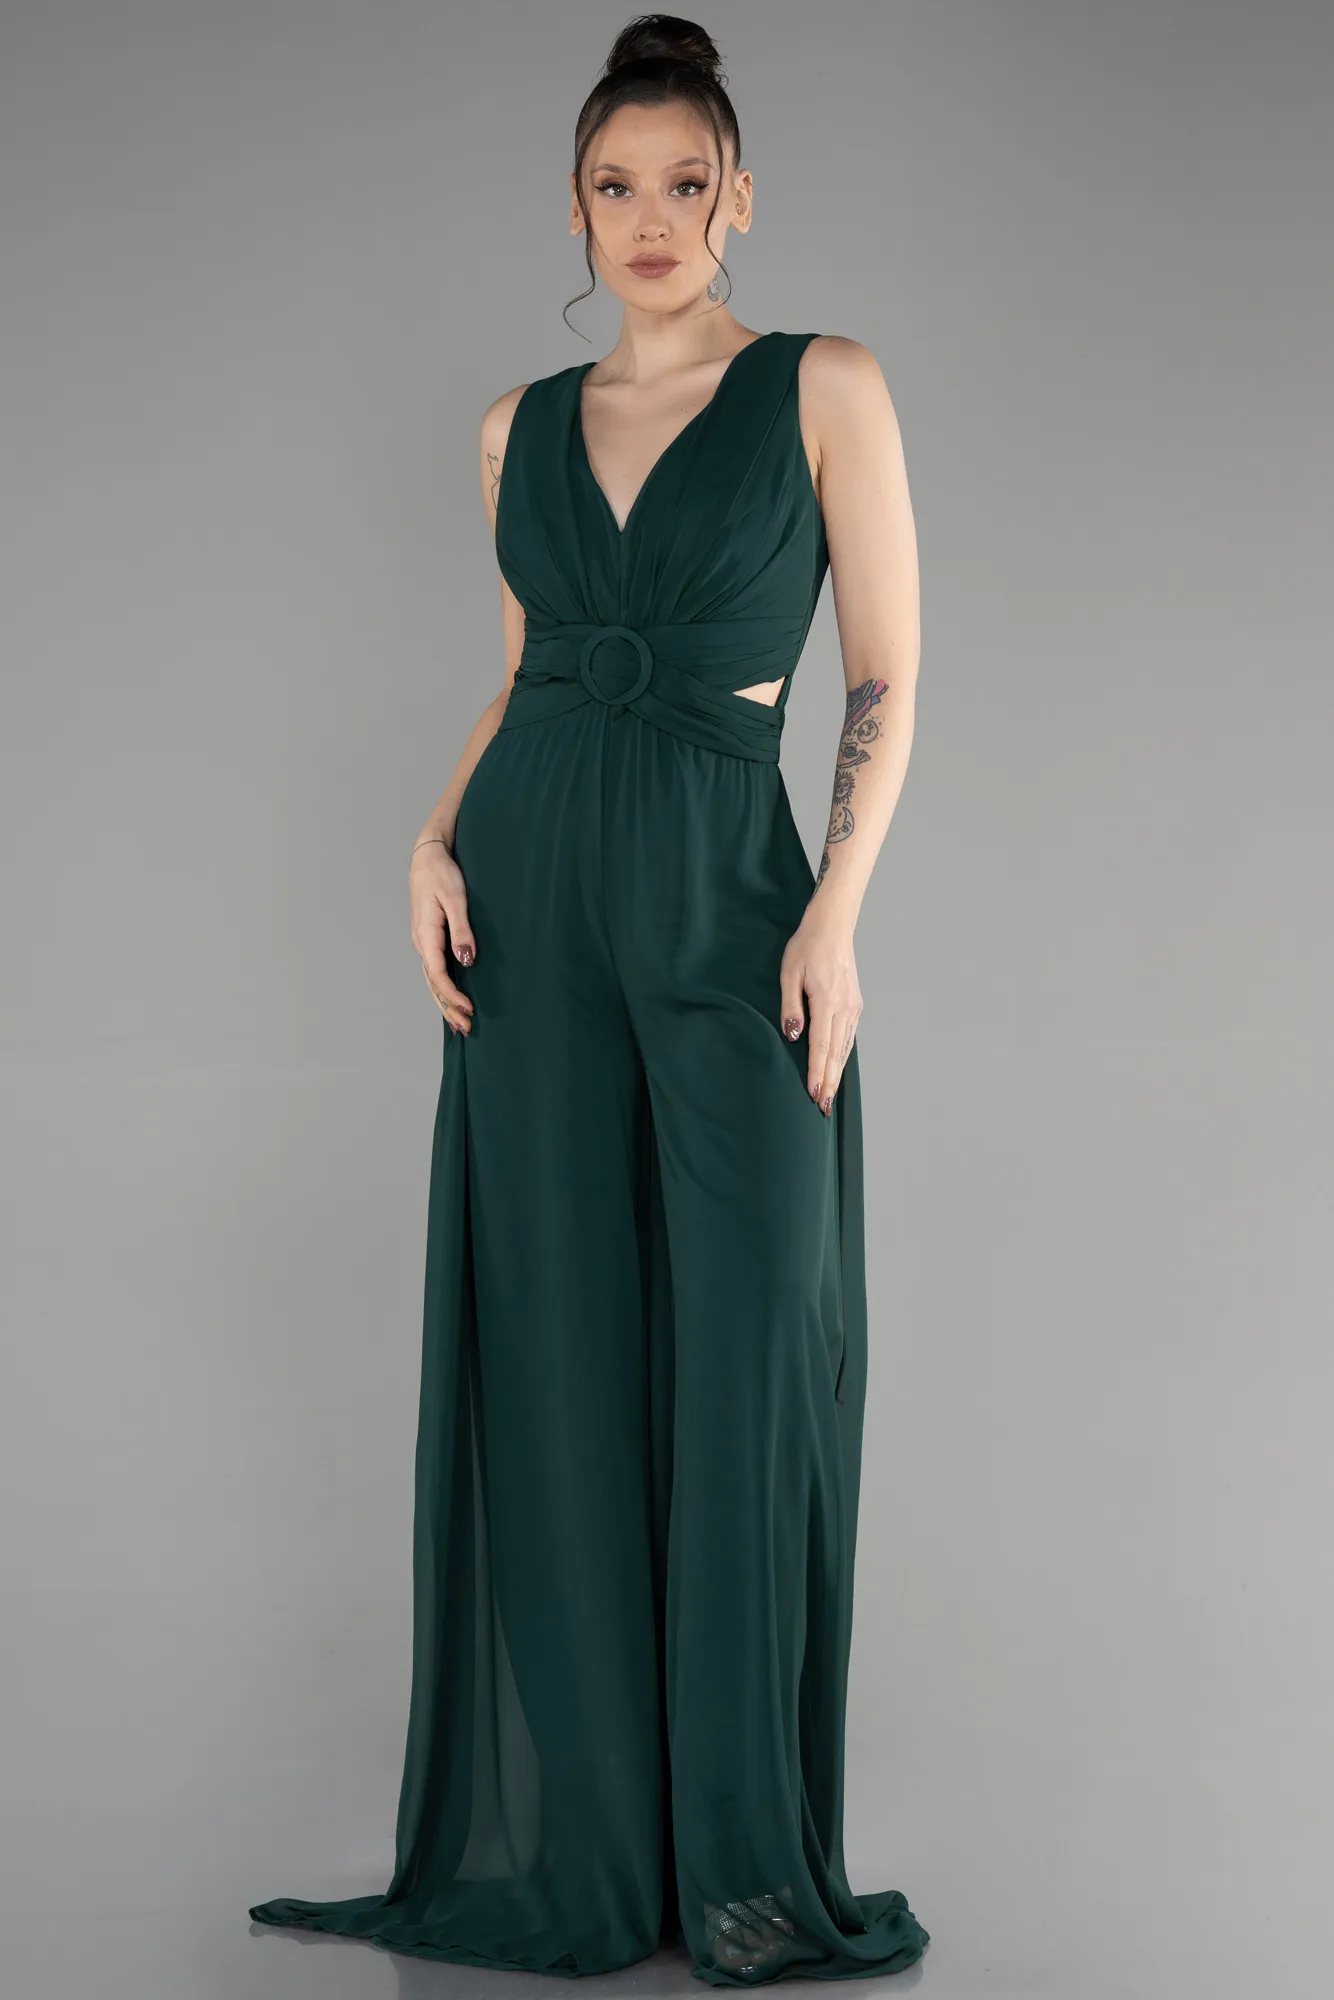 Emerald Green-Chiffon Invitation Dress ABT075